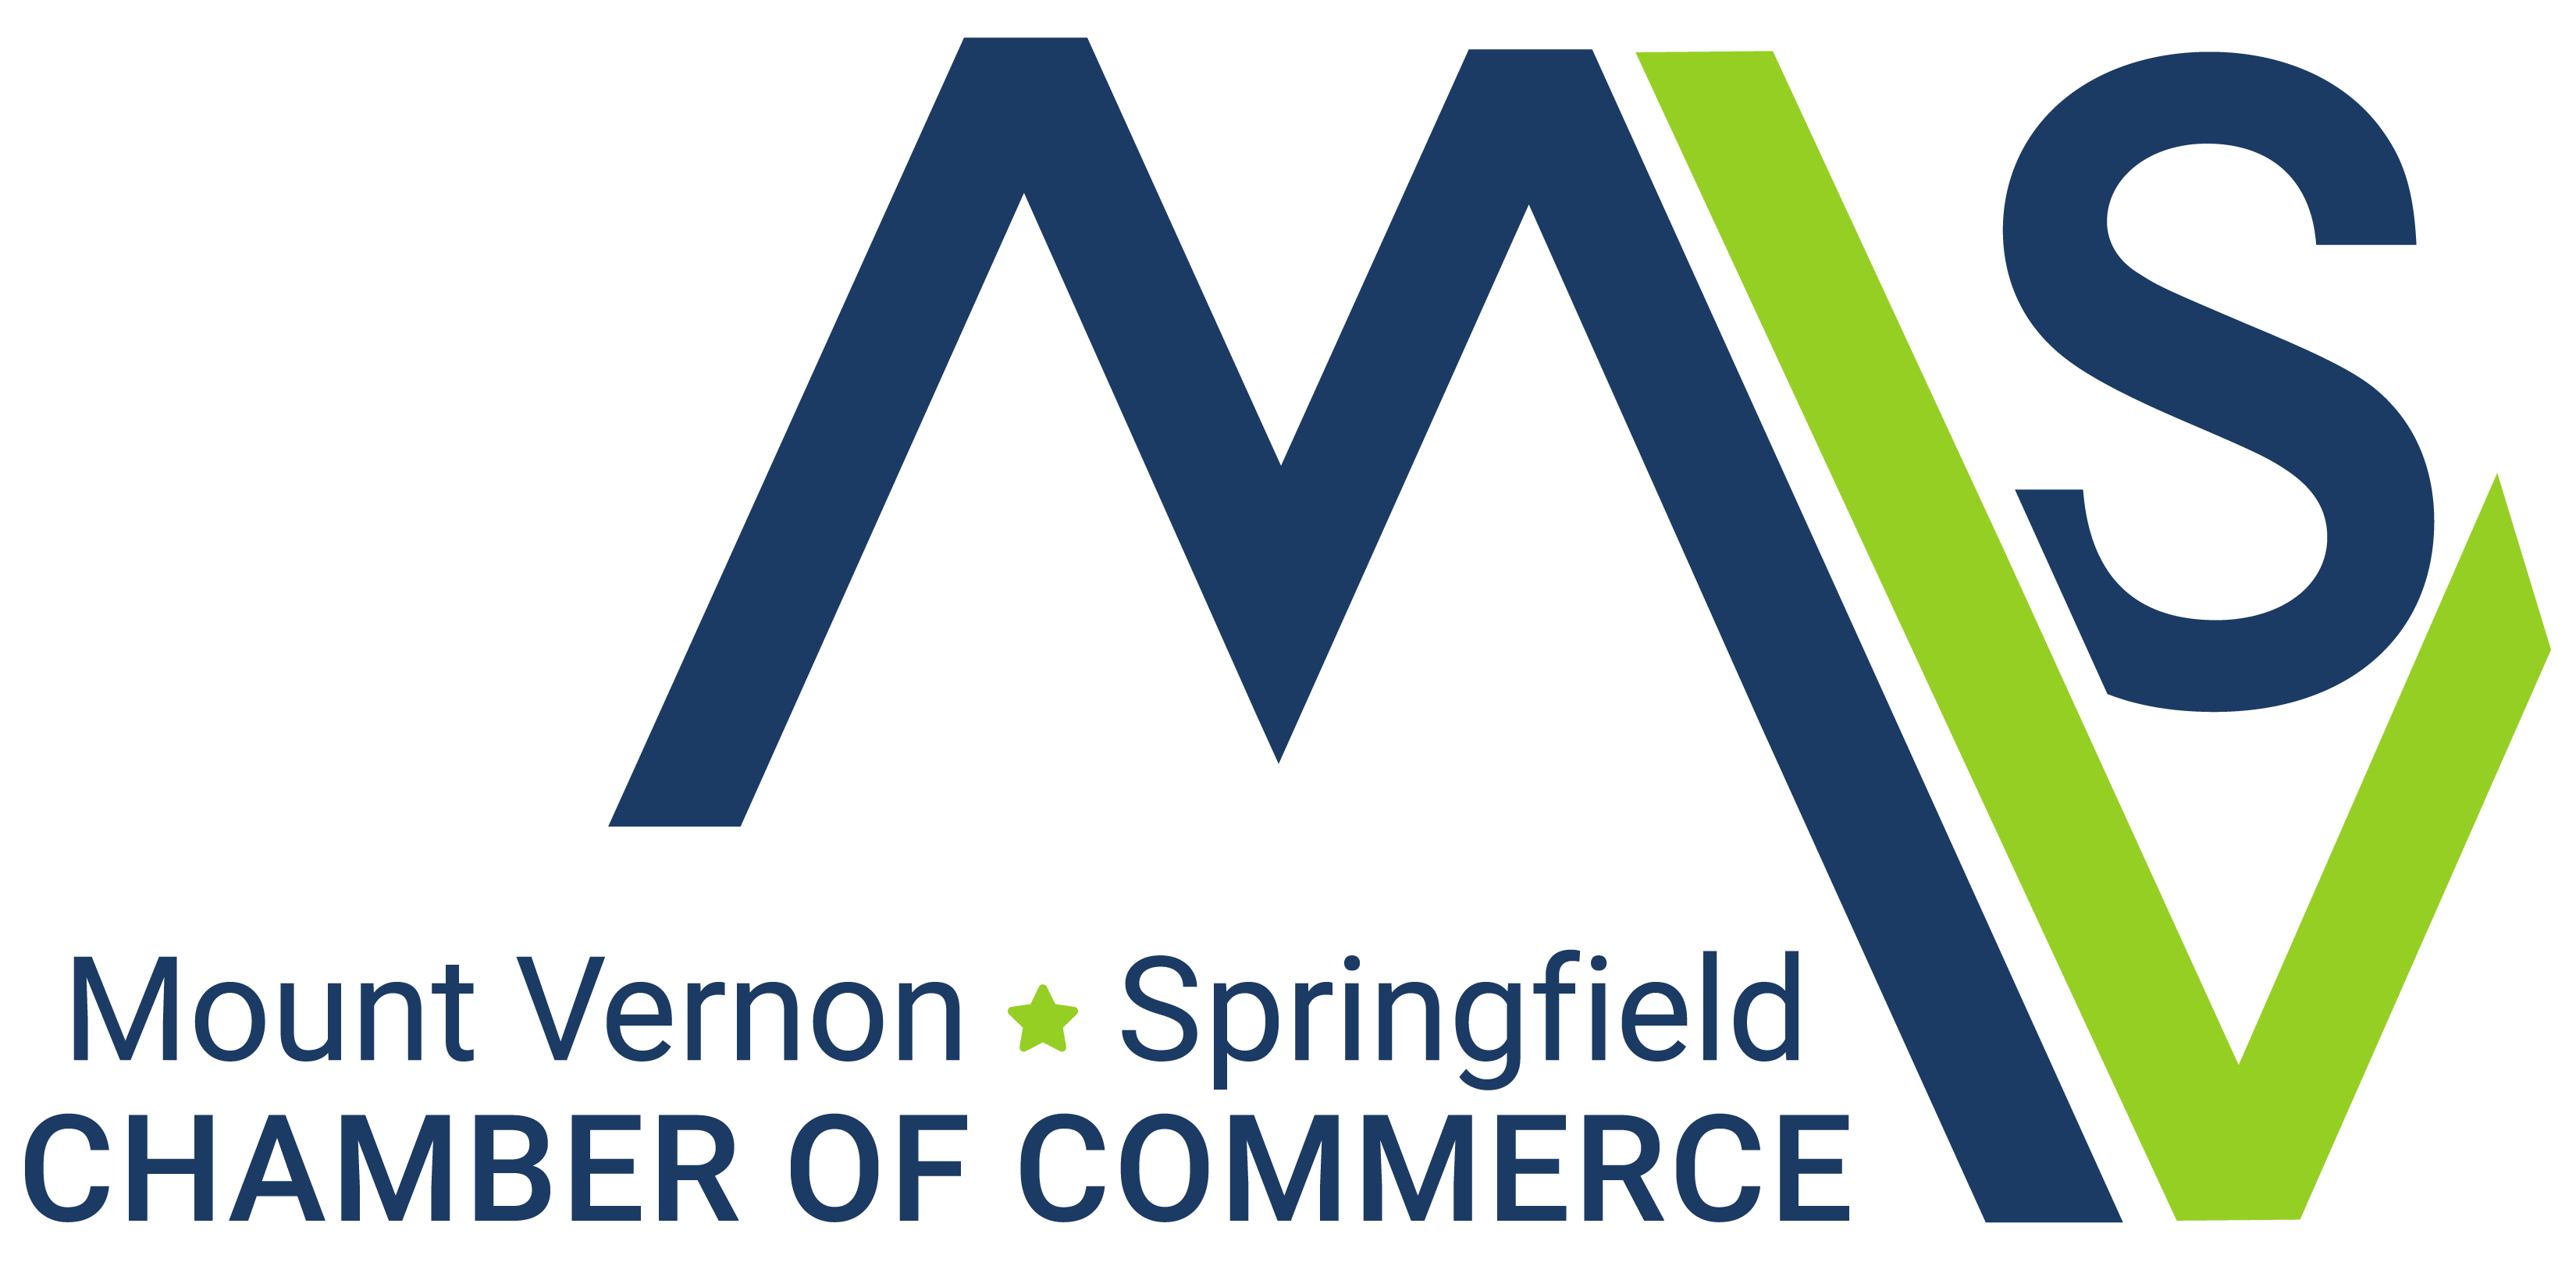 Mount Vernon - Springfield Chamber of Commerce